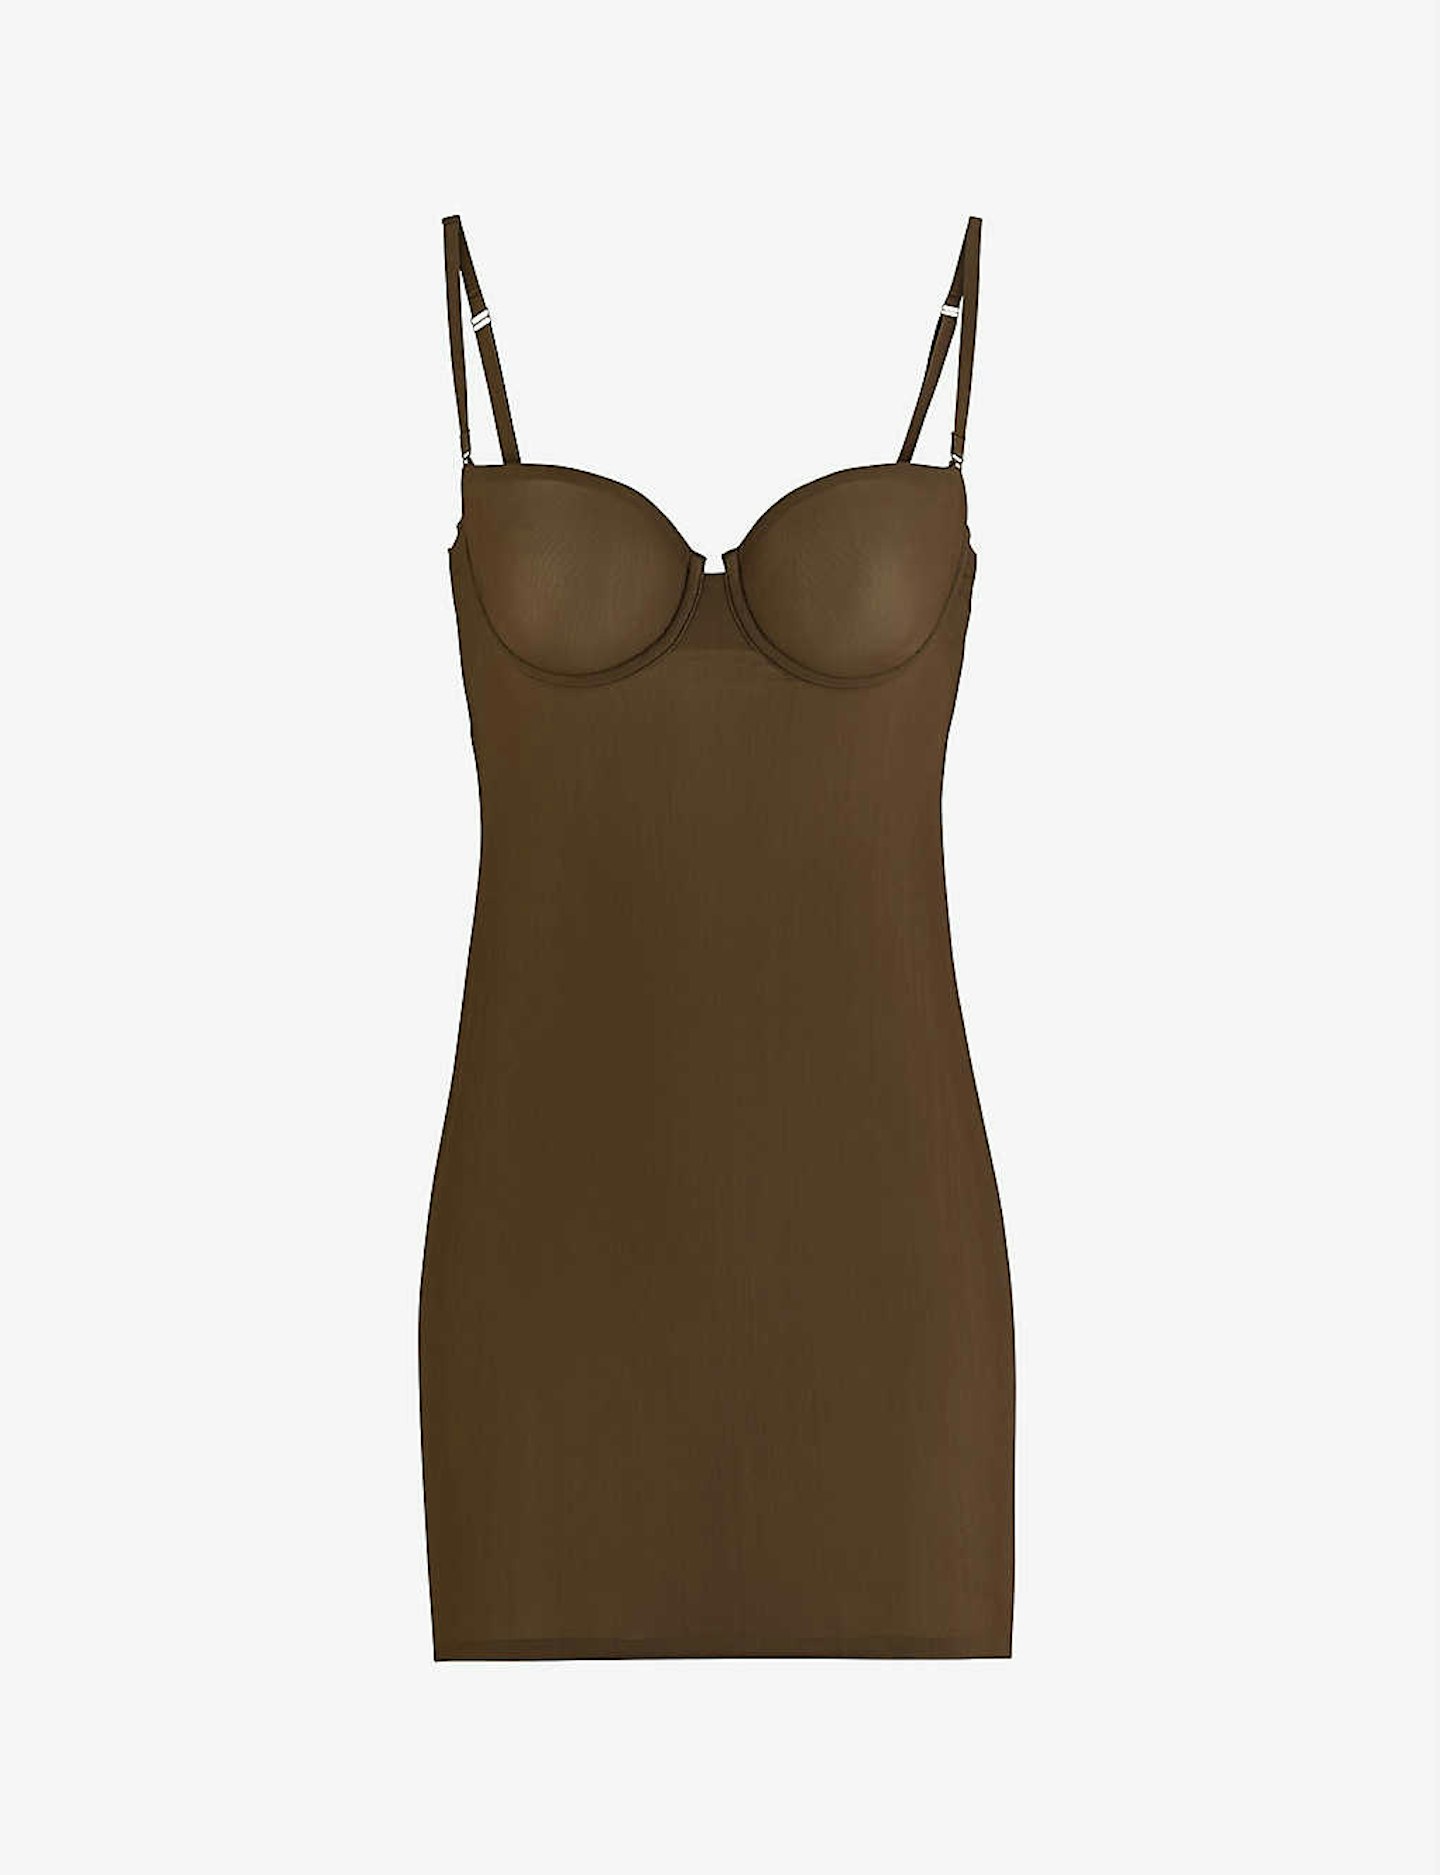 SKIMS, Naked Convertible Stretch-Woven Minidress, £115